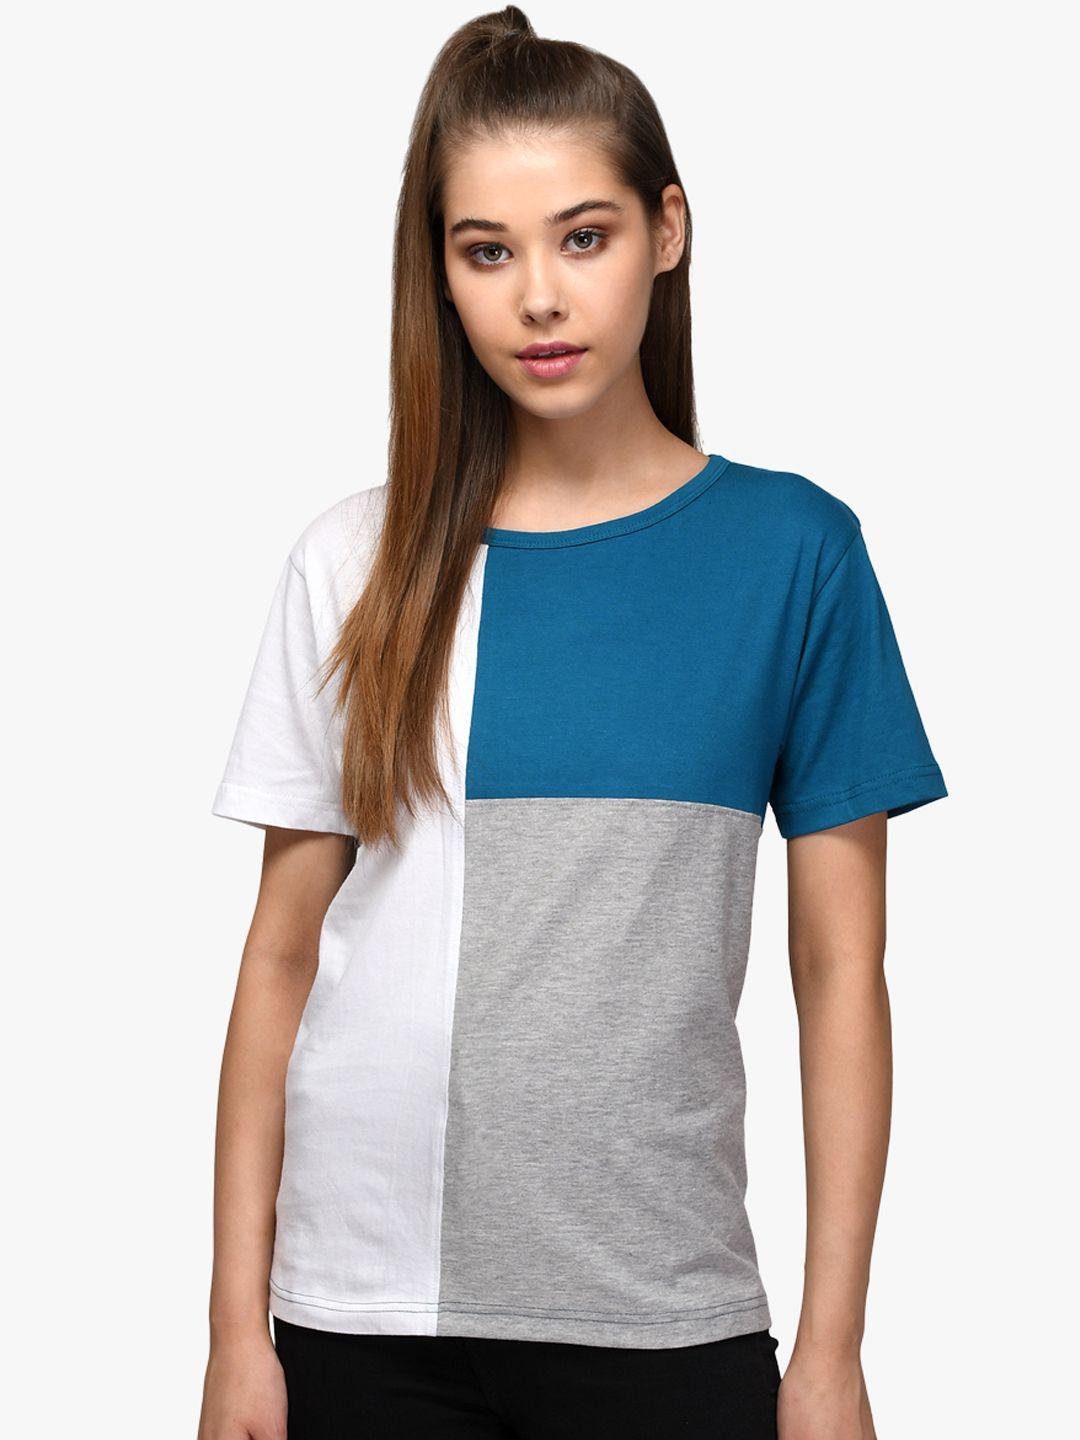 kotty-women-blue-&-grey-colourblocked-round-neck-t-shirt